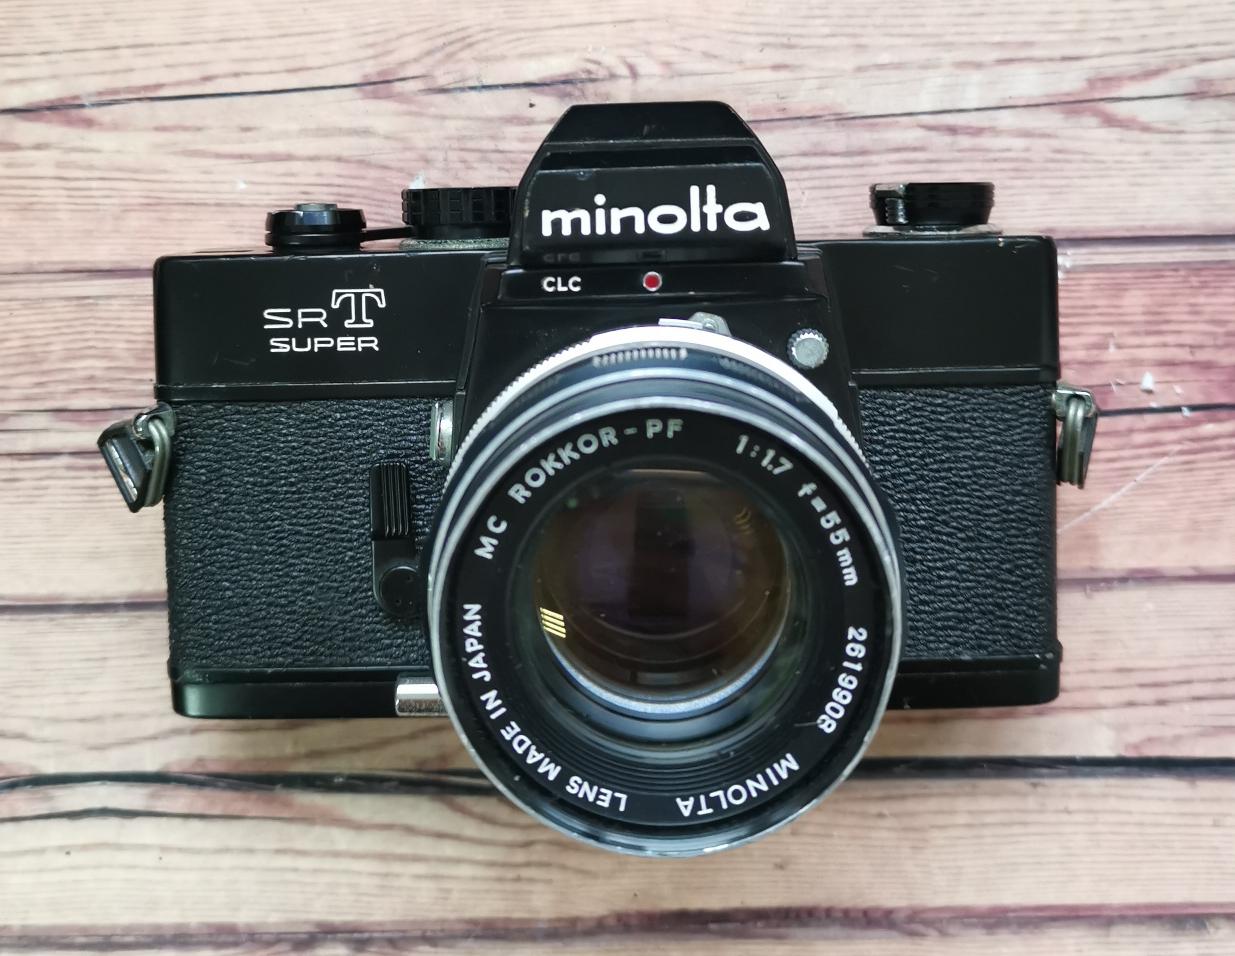 Minolta SRT super+ Minolta mc rokkor-pf 55 mm f/1.7 фото №1